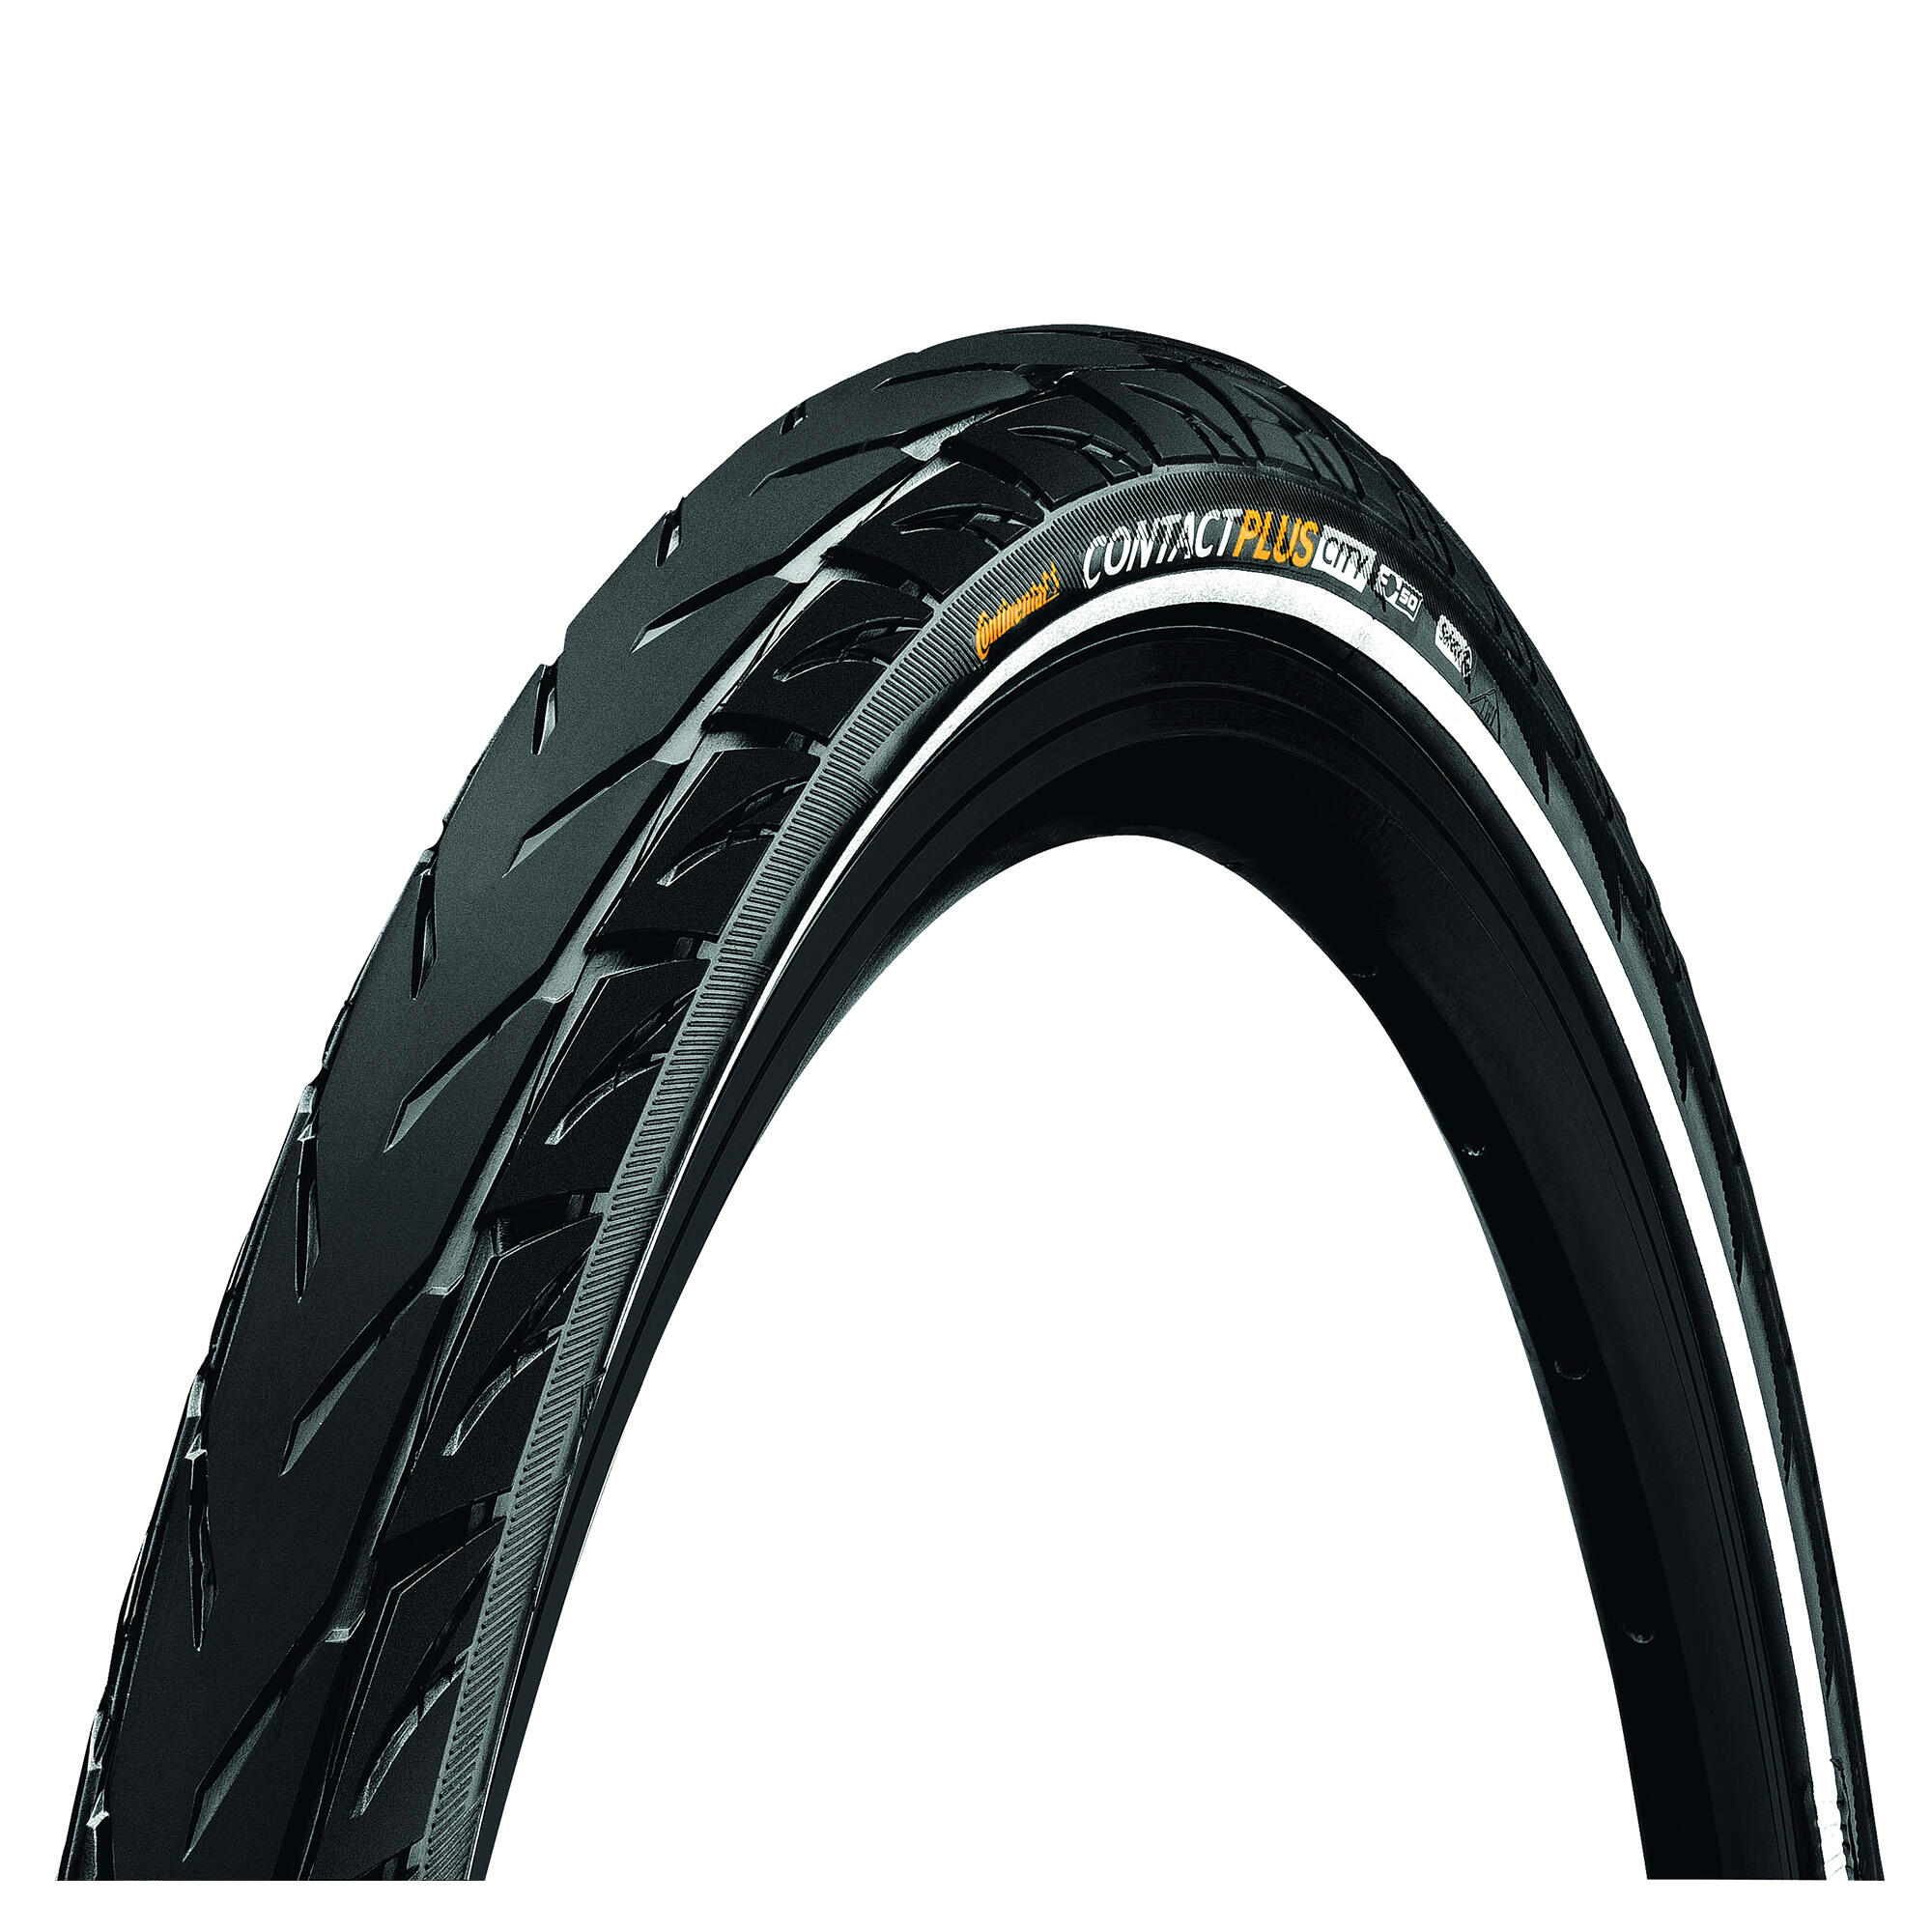 CONTACT Plus City Reflex Tyre-Wire Bead Urban Black/Black Reflex 700X42C (40C) 1/4